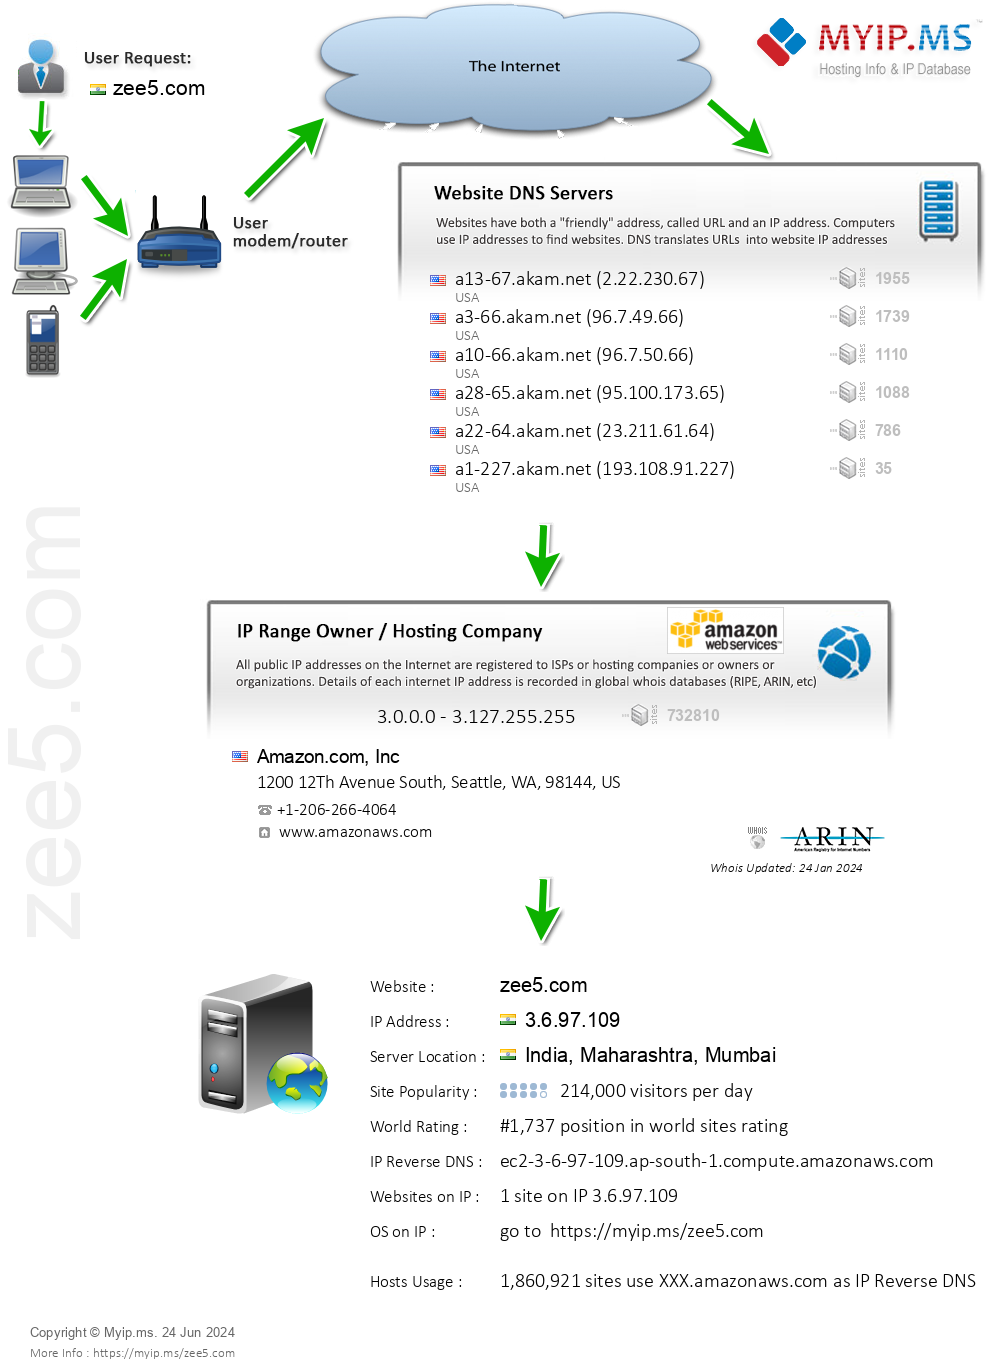 Zee5.com - Website Hosting Visual IP Diagram